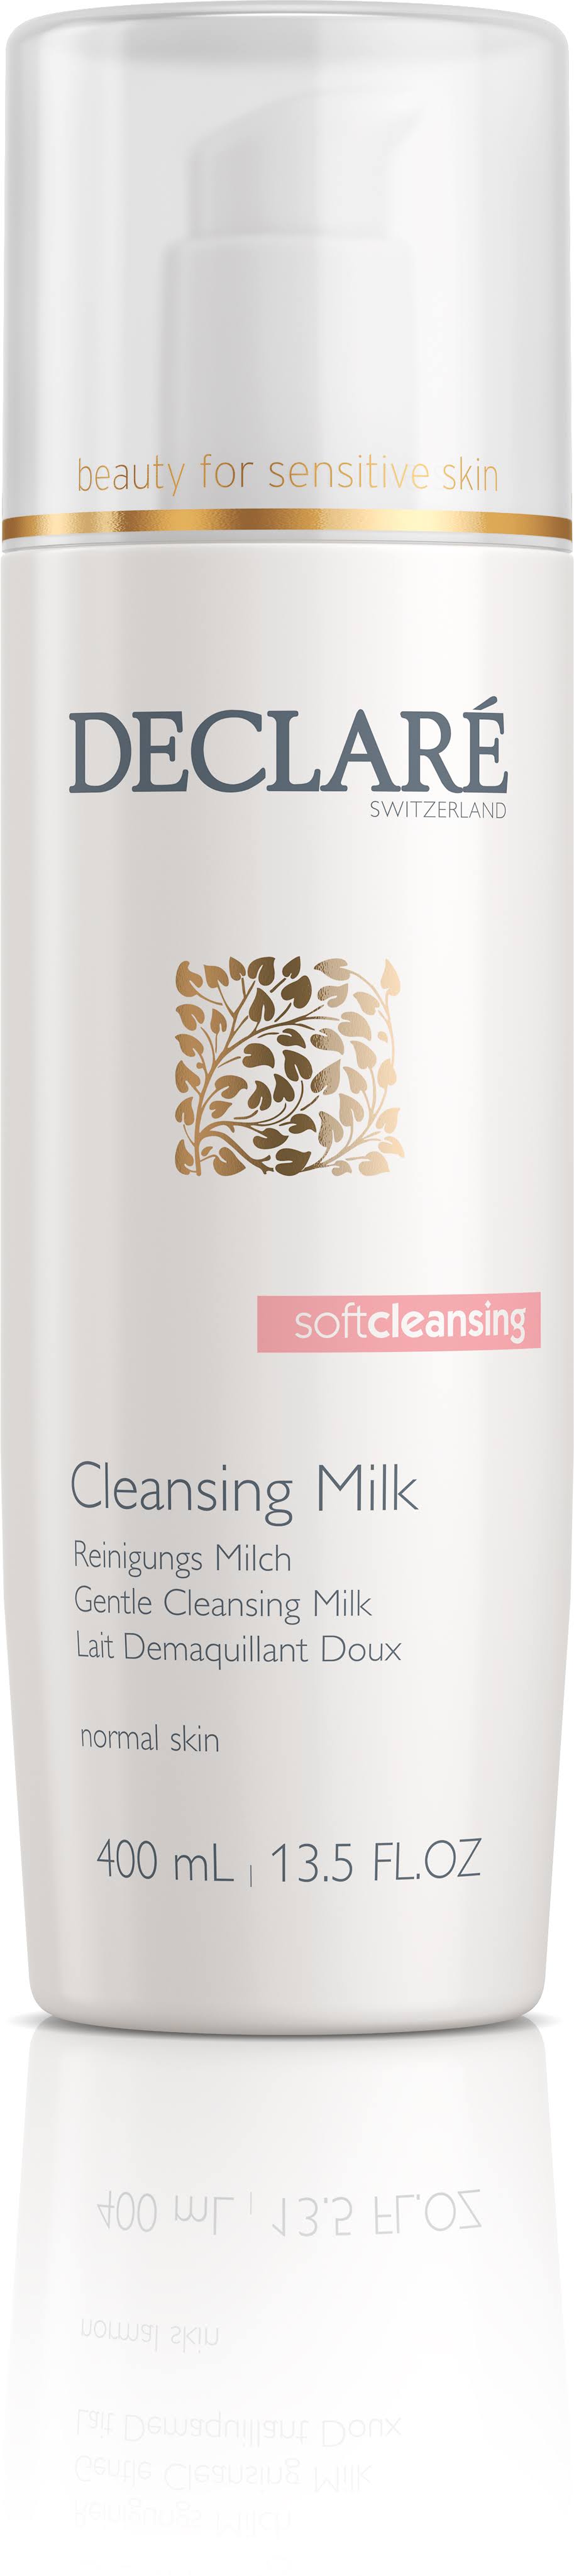 Declare Gentle Cleansing Milk